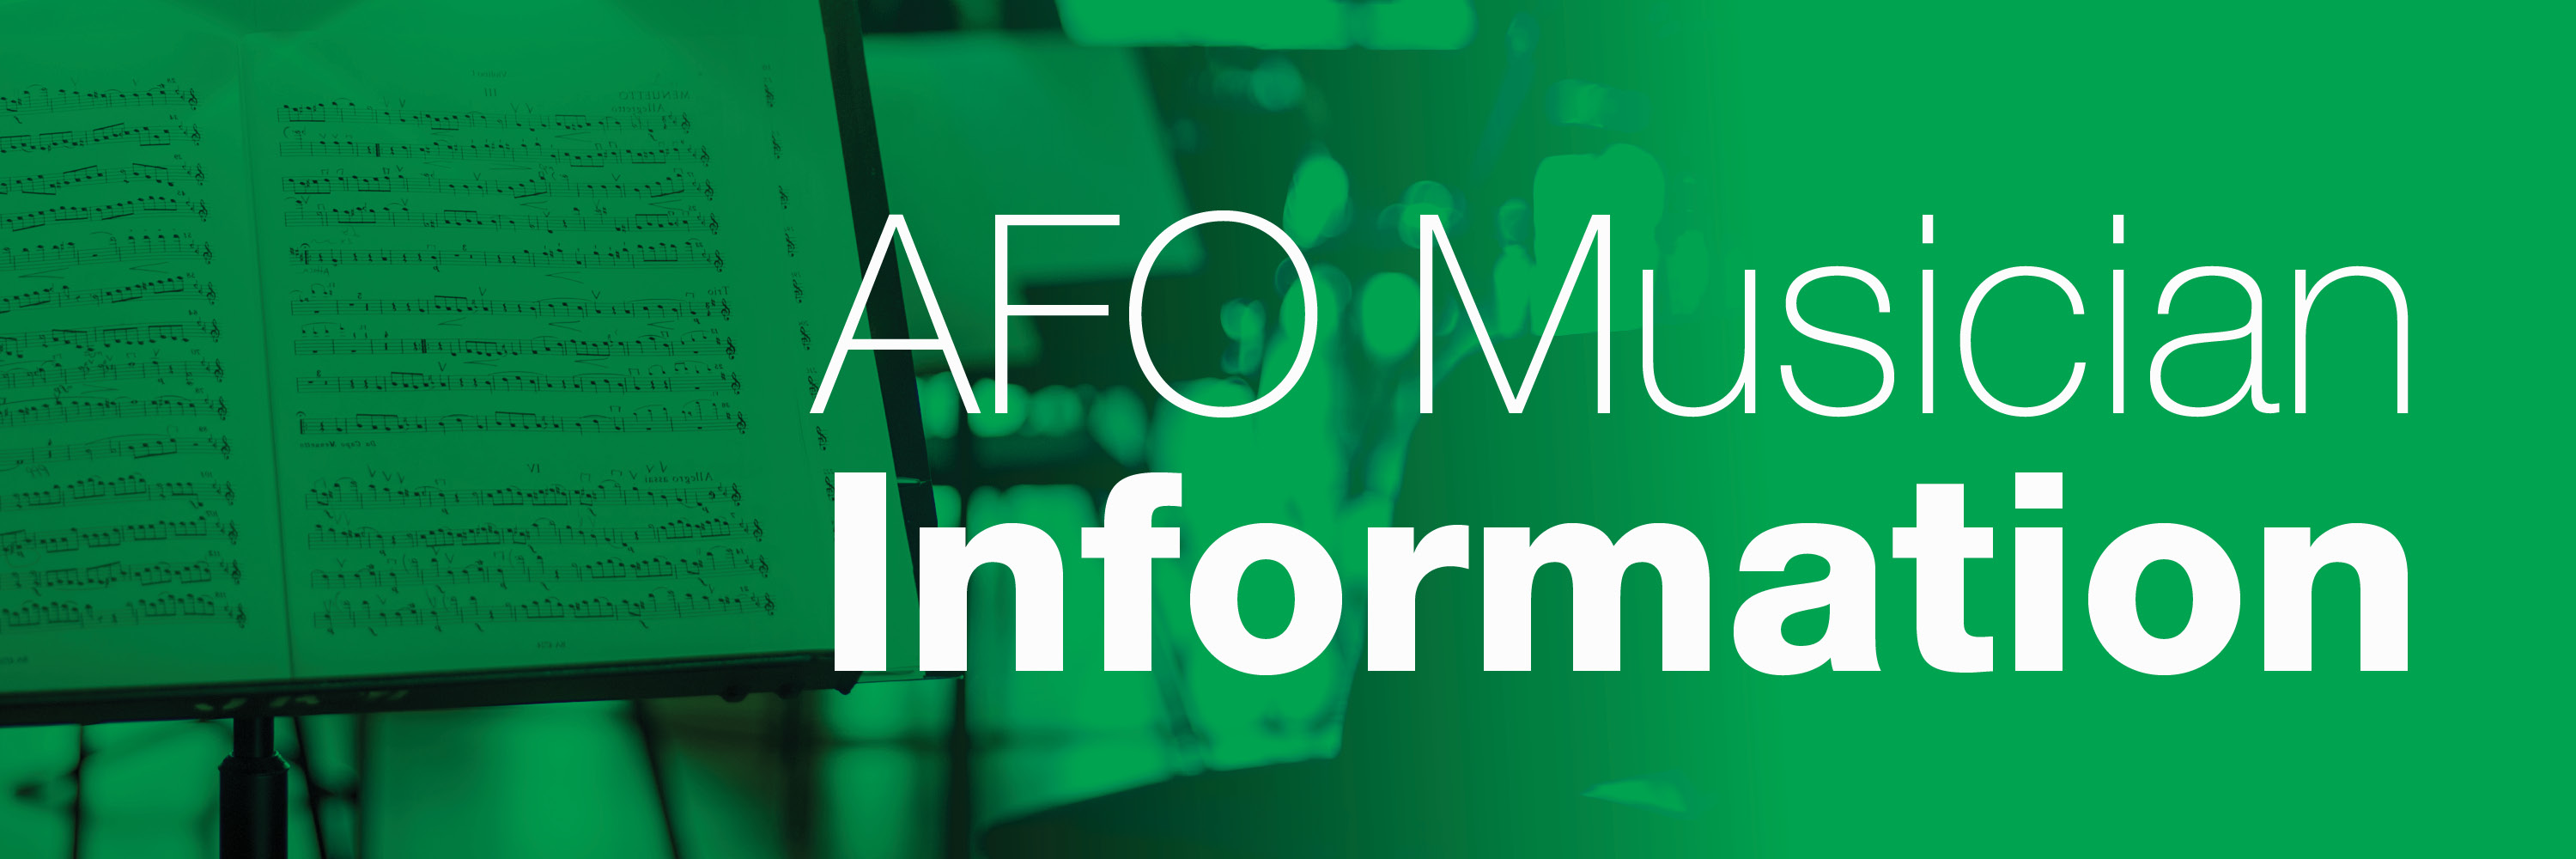 AFO Musician Information 